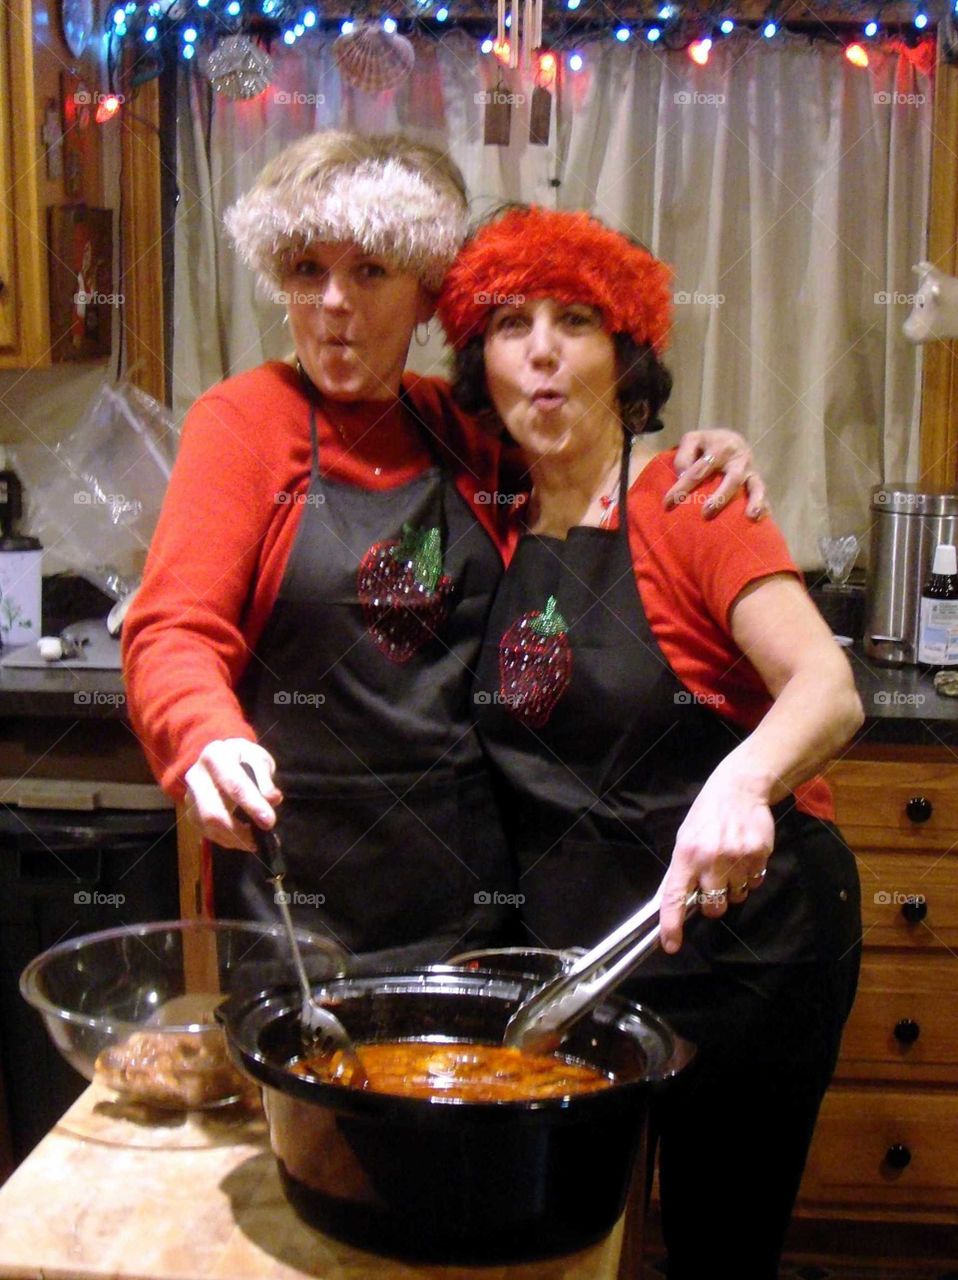 Portrait of two women's preparing food